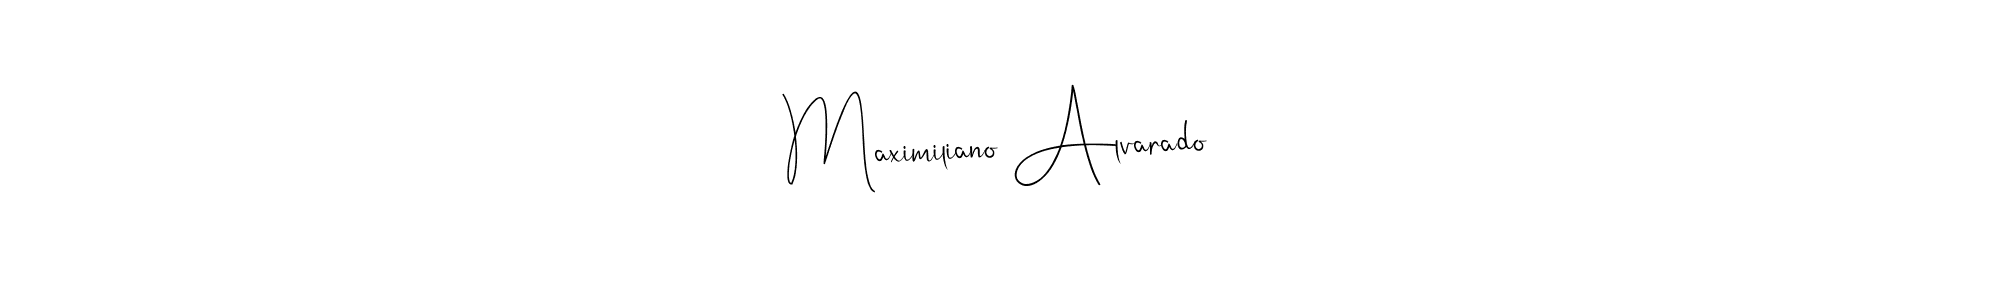 How to Draw Maximiliano Alvarado signature style? Andilay-7BmLP is a latest design signature styles for name Maximiliano Alvarado. Maximiliano Alvarado signature style 4 images and pictures png